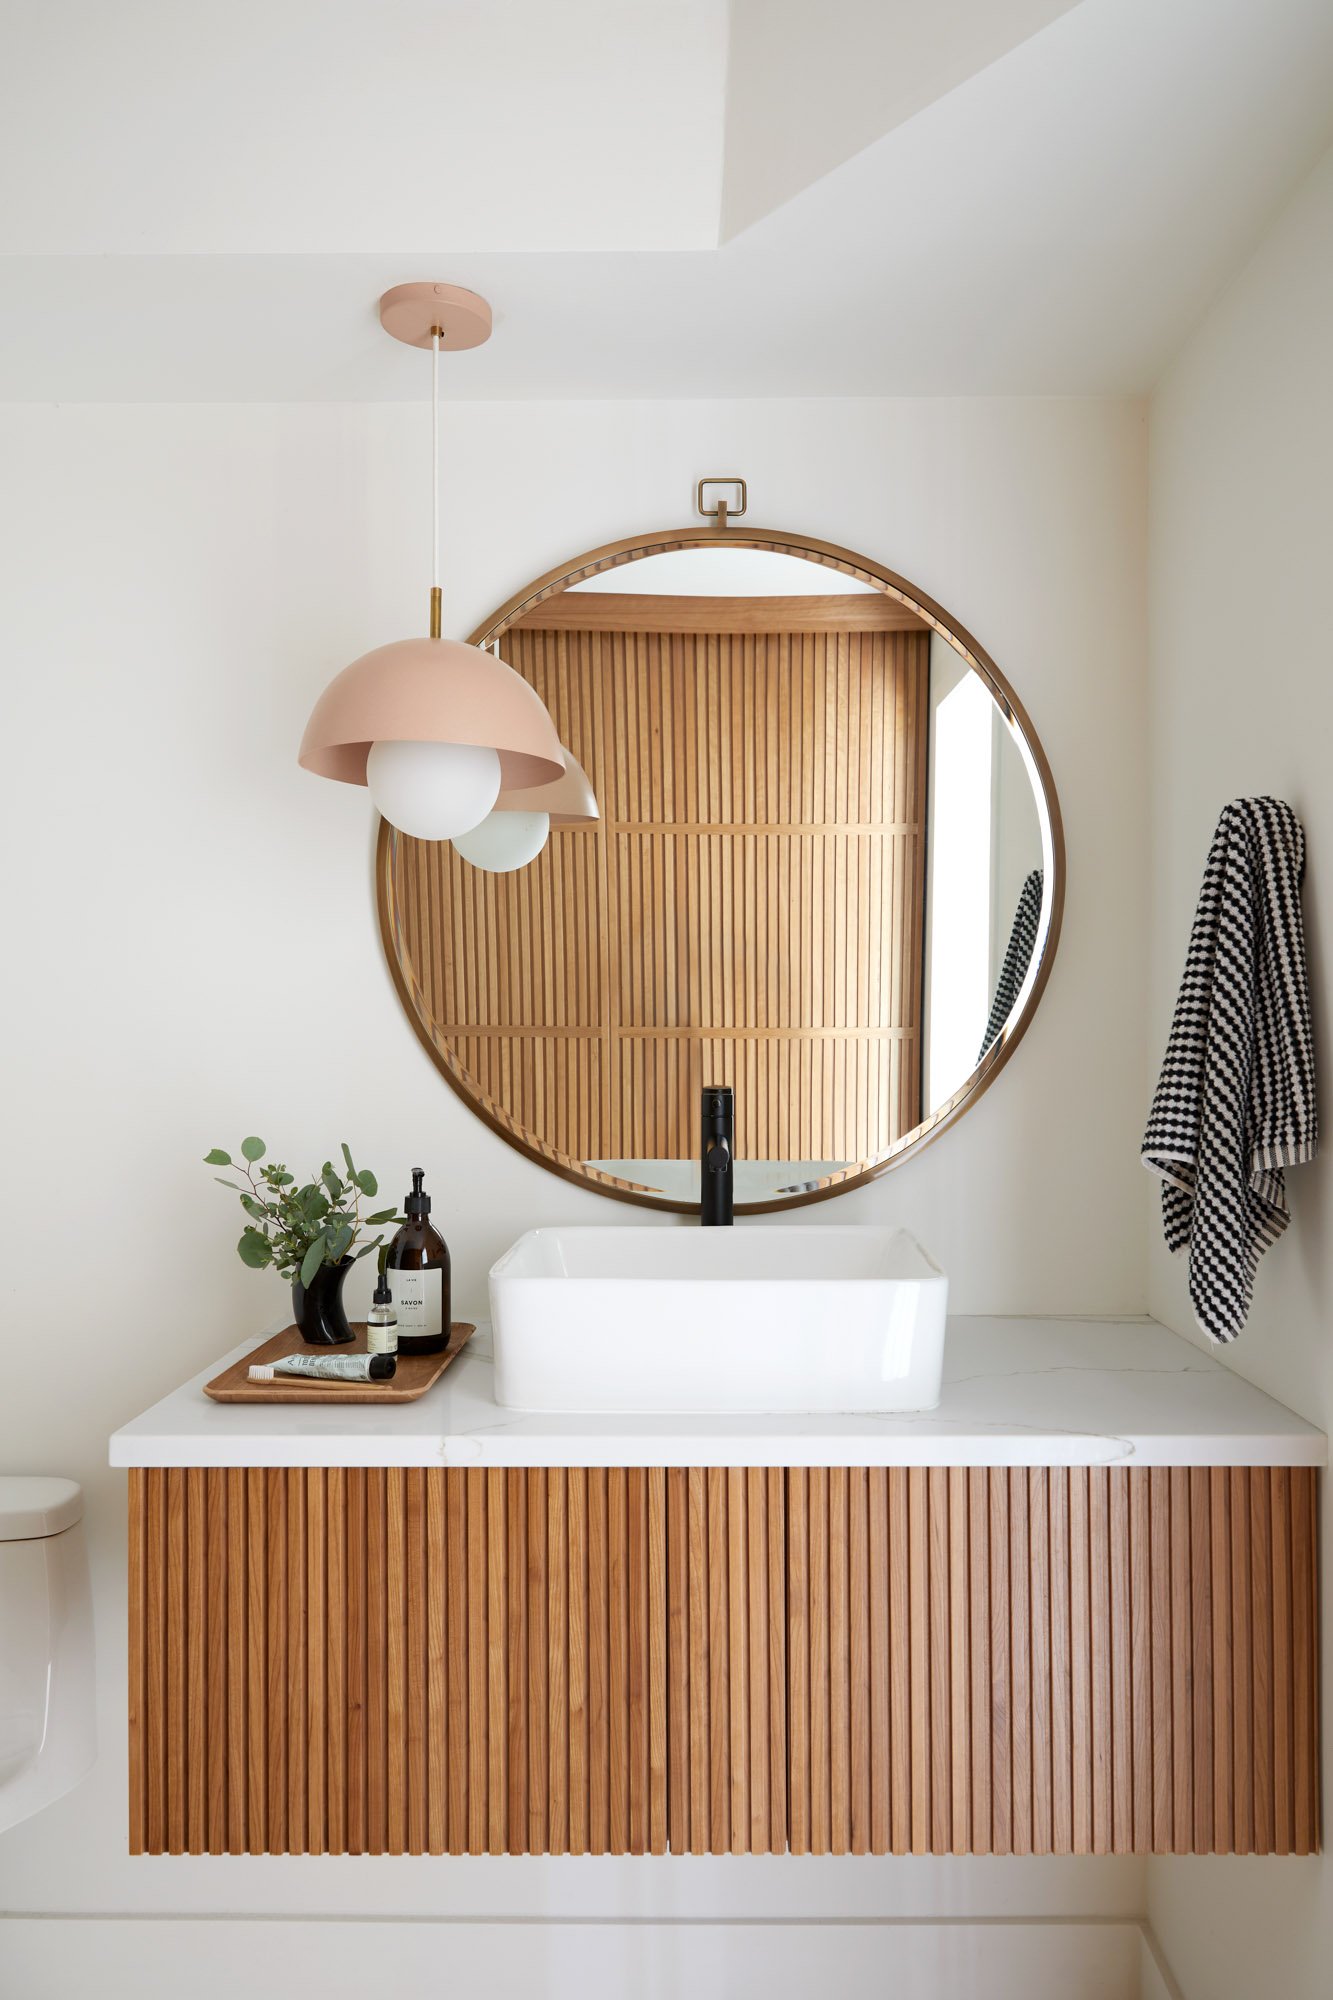 Valerie_Morisset_Interior_Design_Bathroom Vanity_Montreal_Quebec_Canada_Senneville_0844_LR.jpg